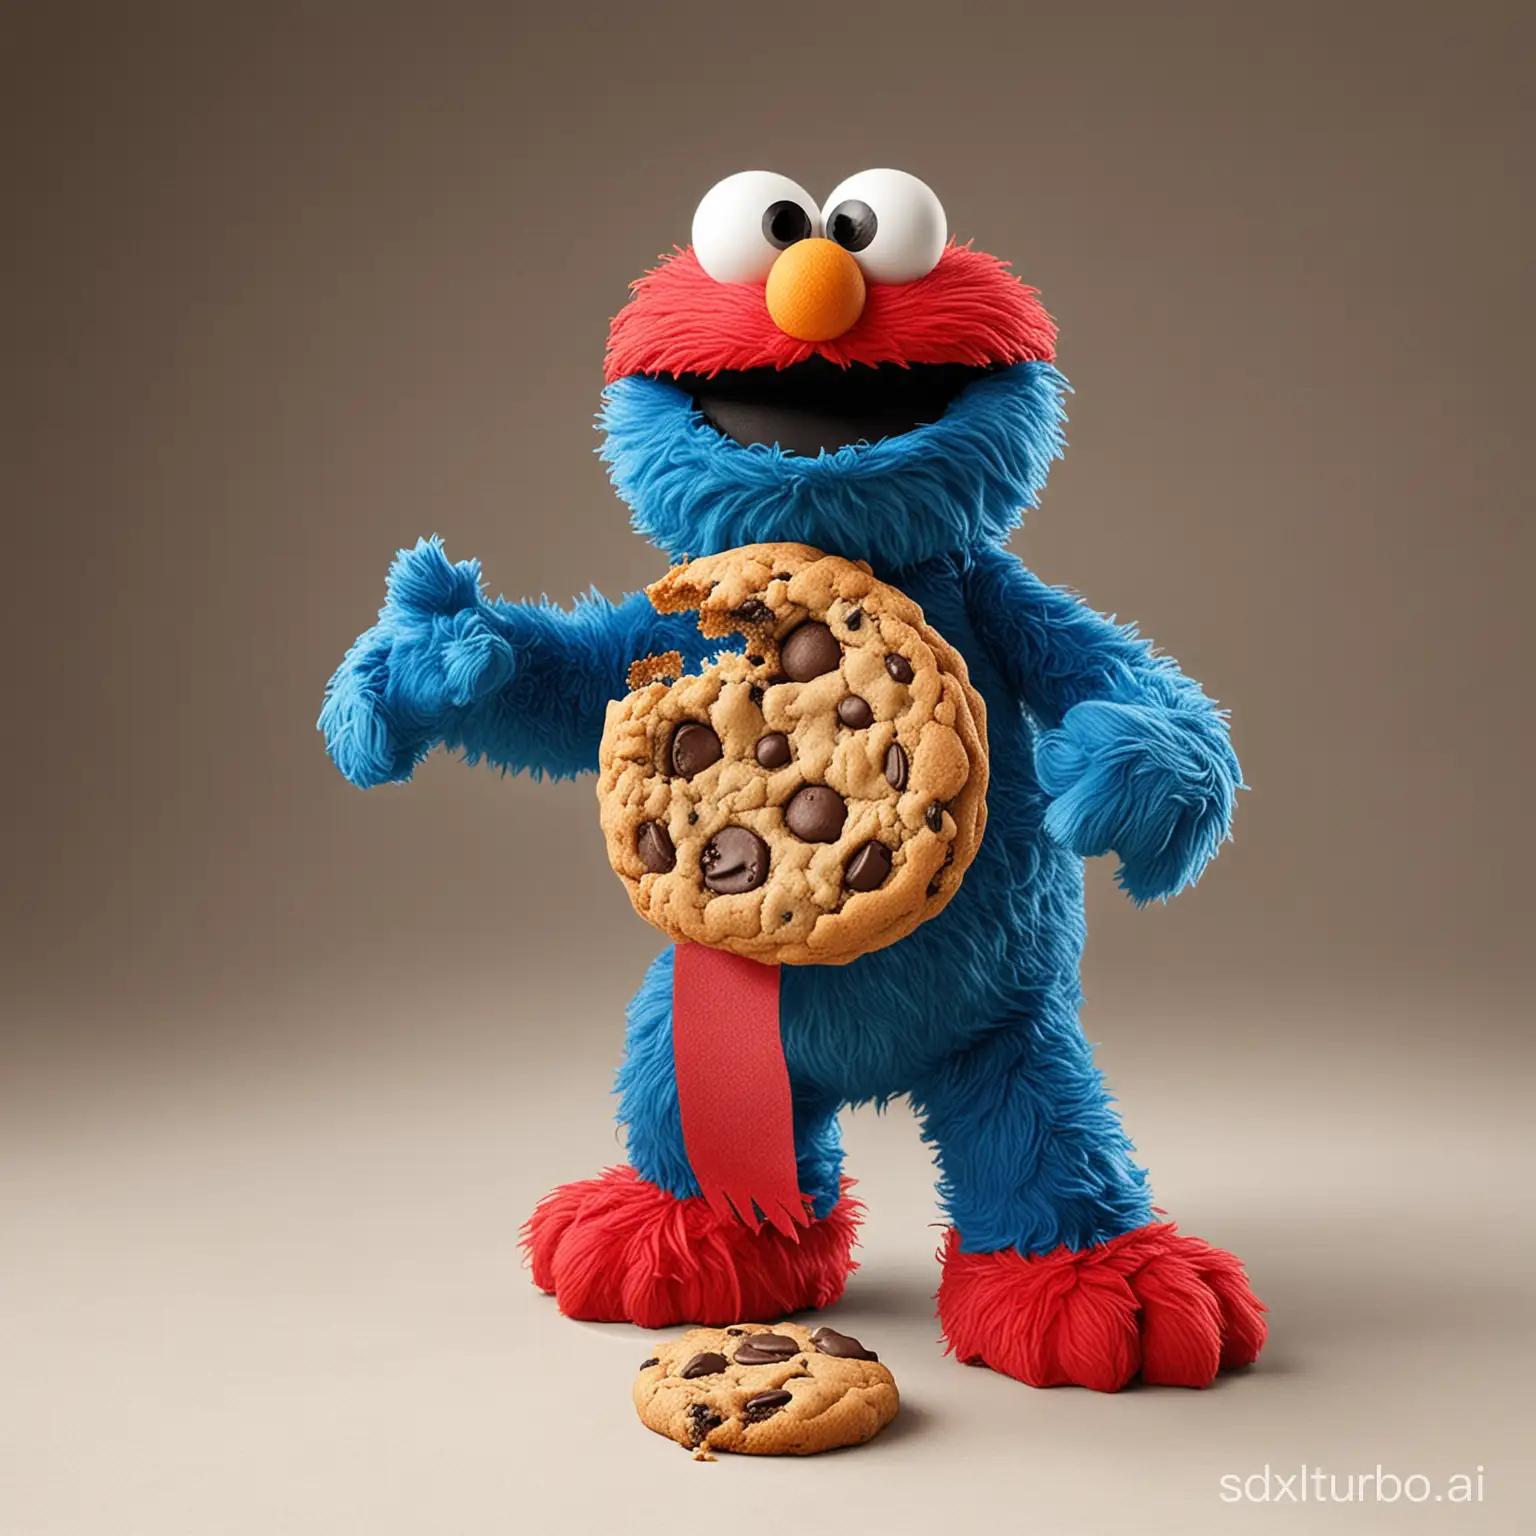 Sesame-Street-Duo-Elmo-and-Cookie-Monster-Bonding-Over-Snacks